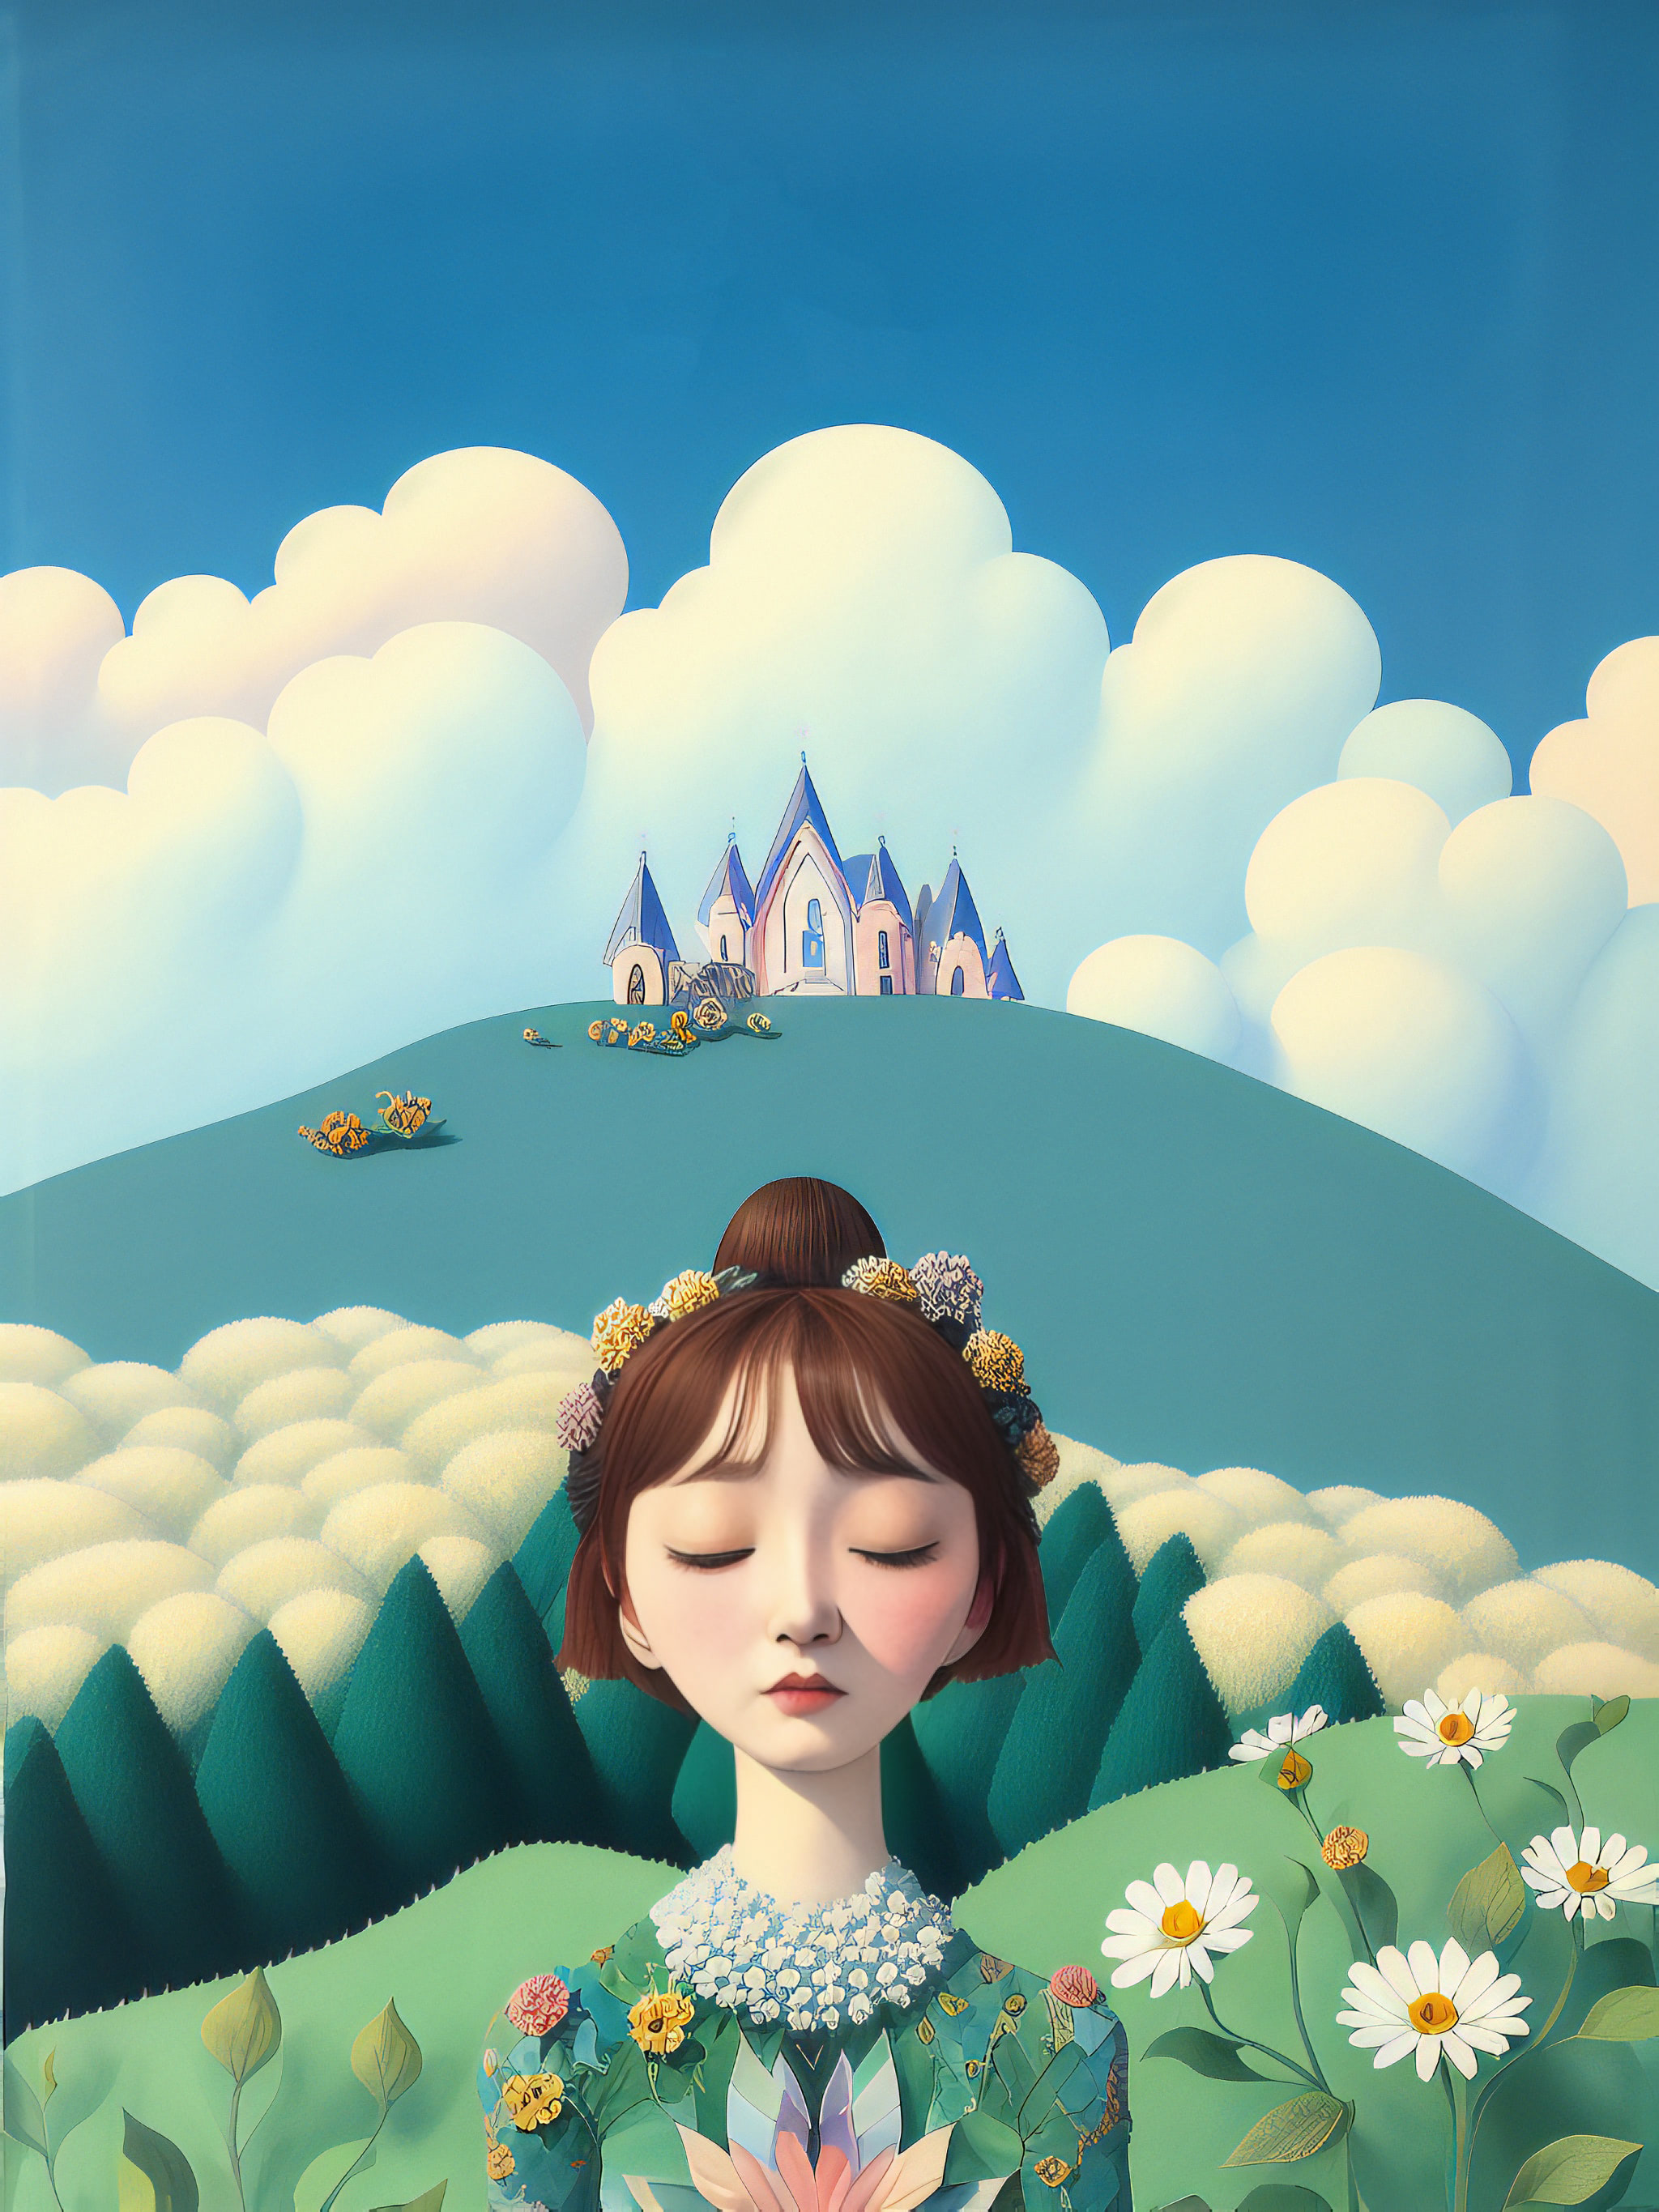 princess-dreamland-painting-vector